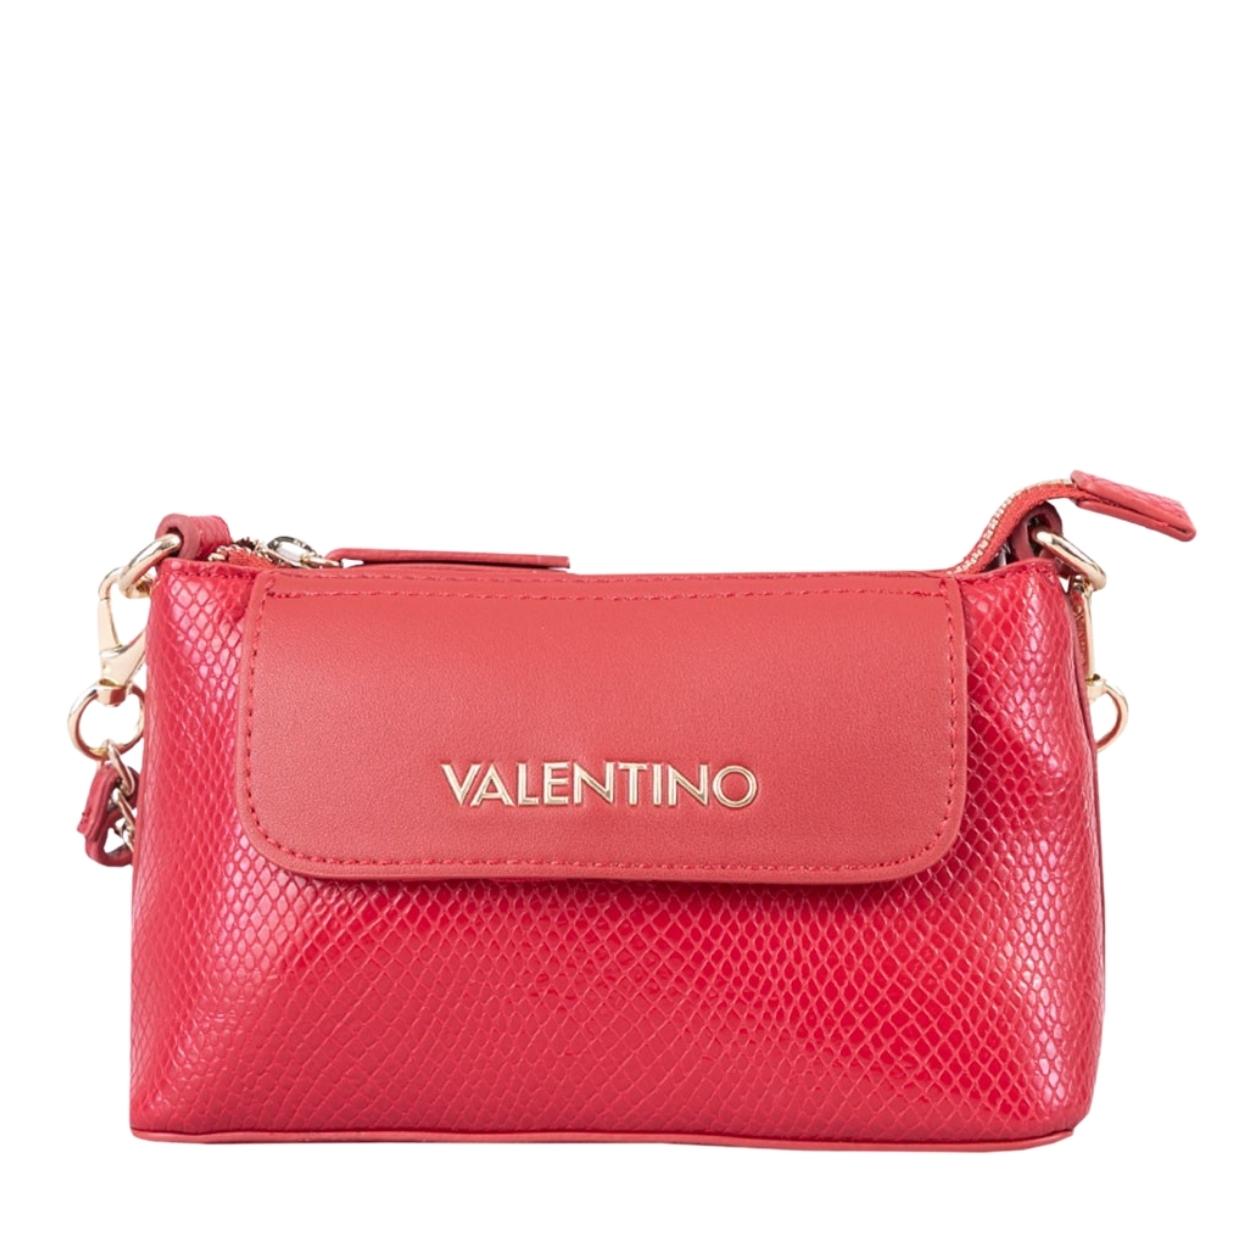 Valentino Womens Black Special Ross Crossbody Bag